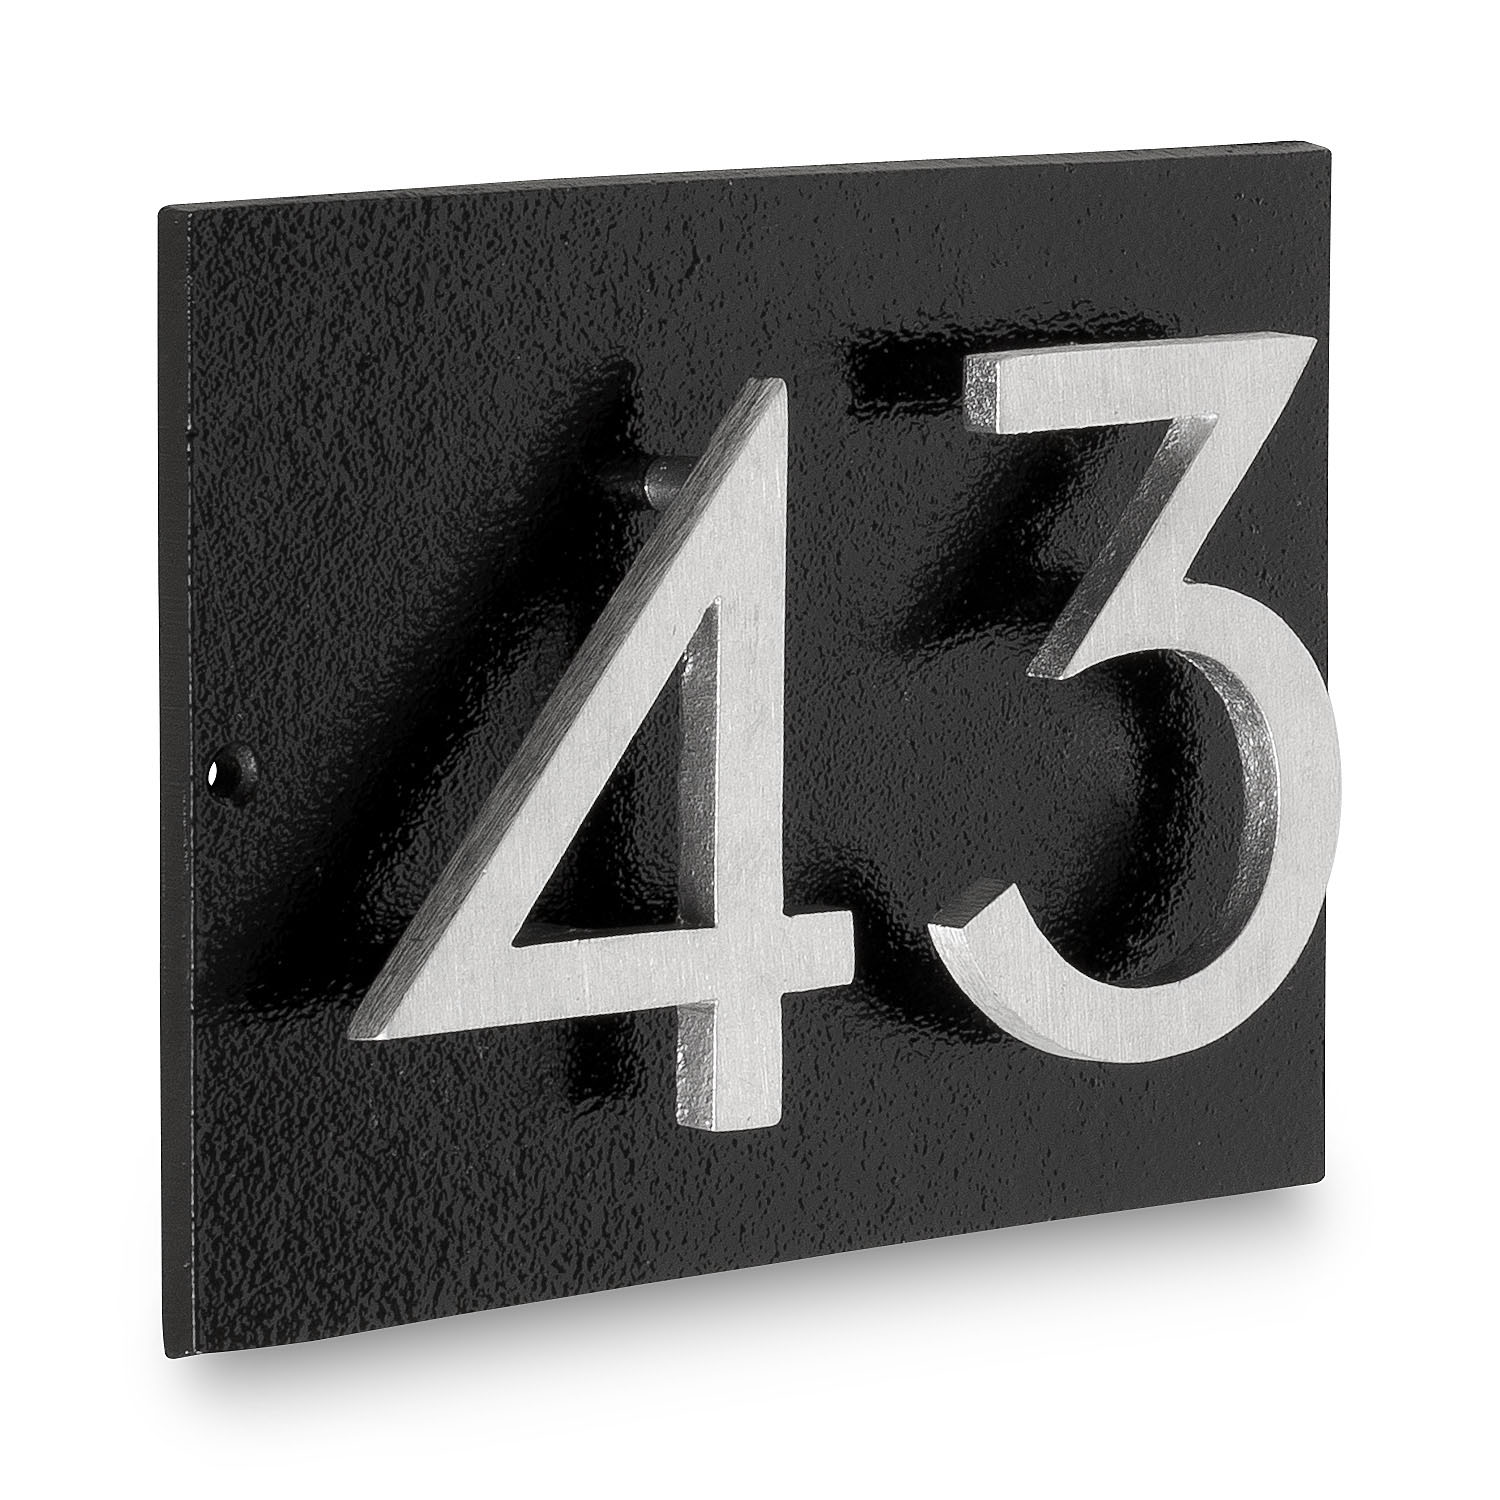 Floating Modern 3" Number Horizontal Address Plaque (2 digits)